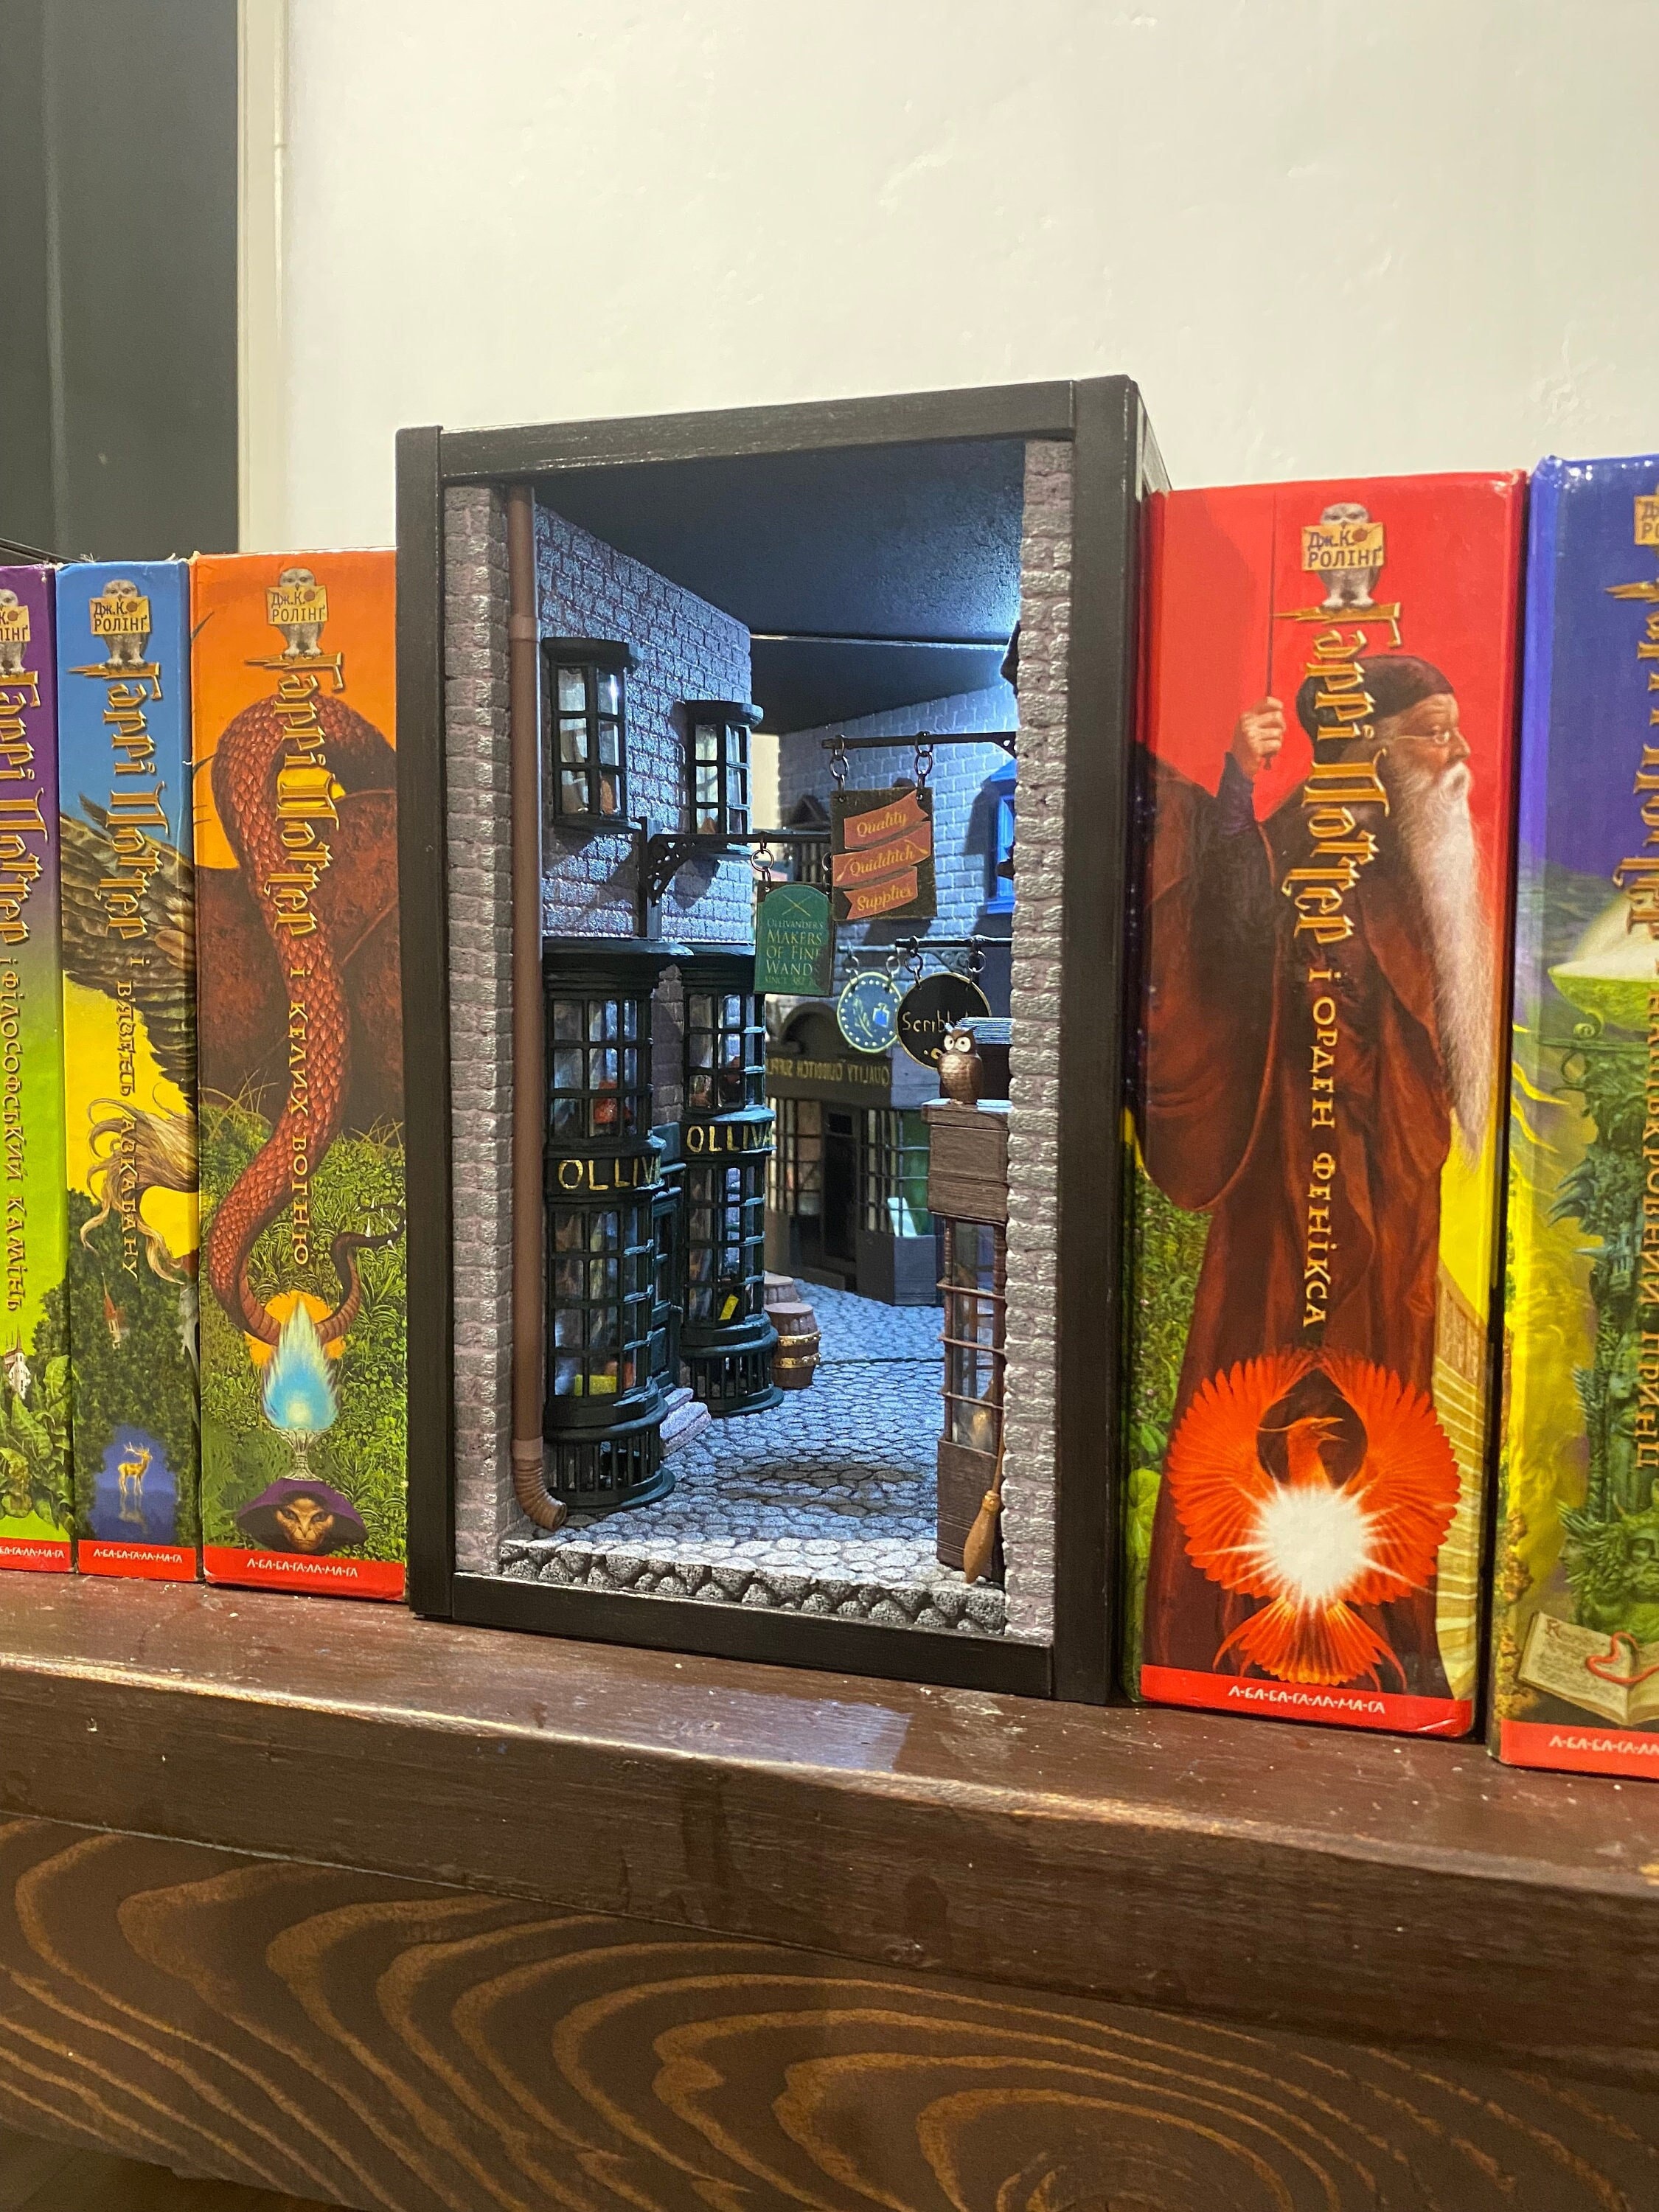 Harry Potter Book nook/Rolife DIY Book Nook Miniature Kit for Bookshelf  Insert Decor(Time Travel) 